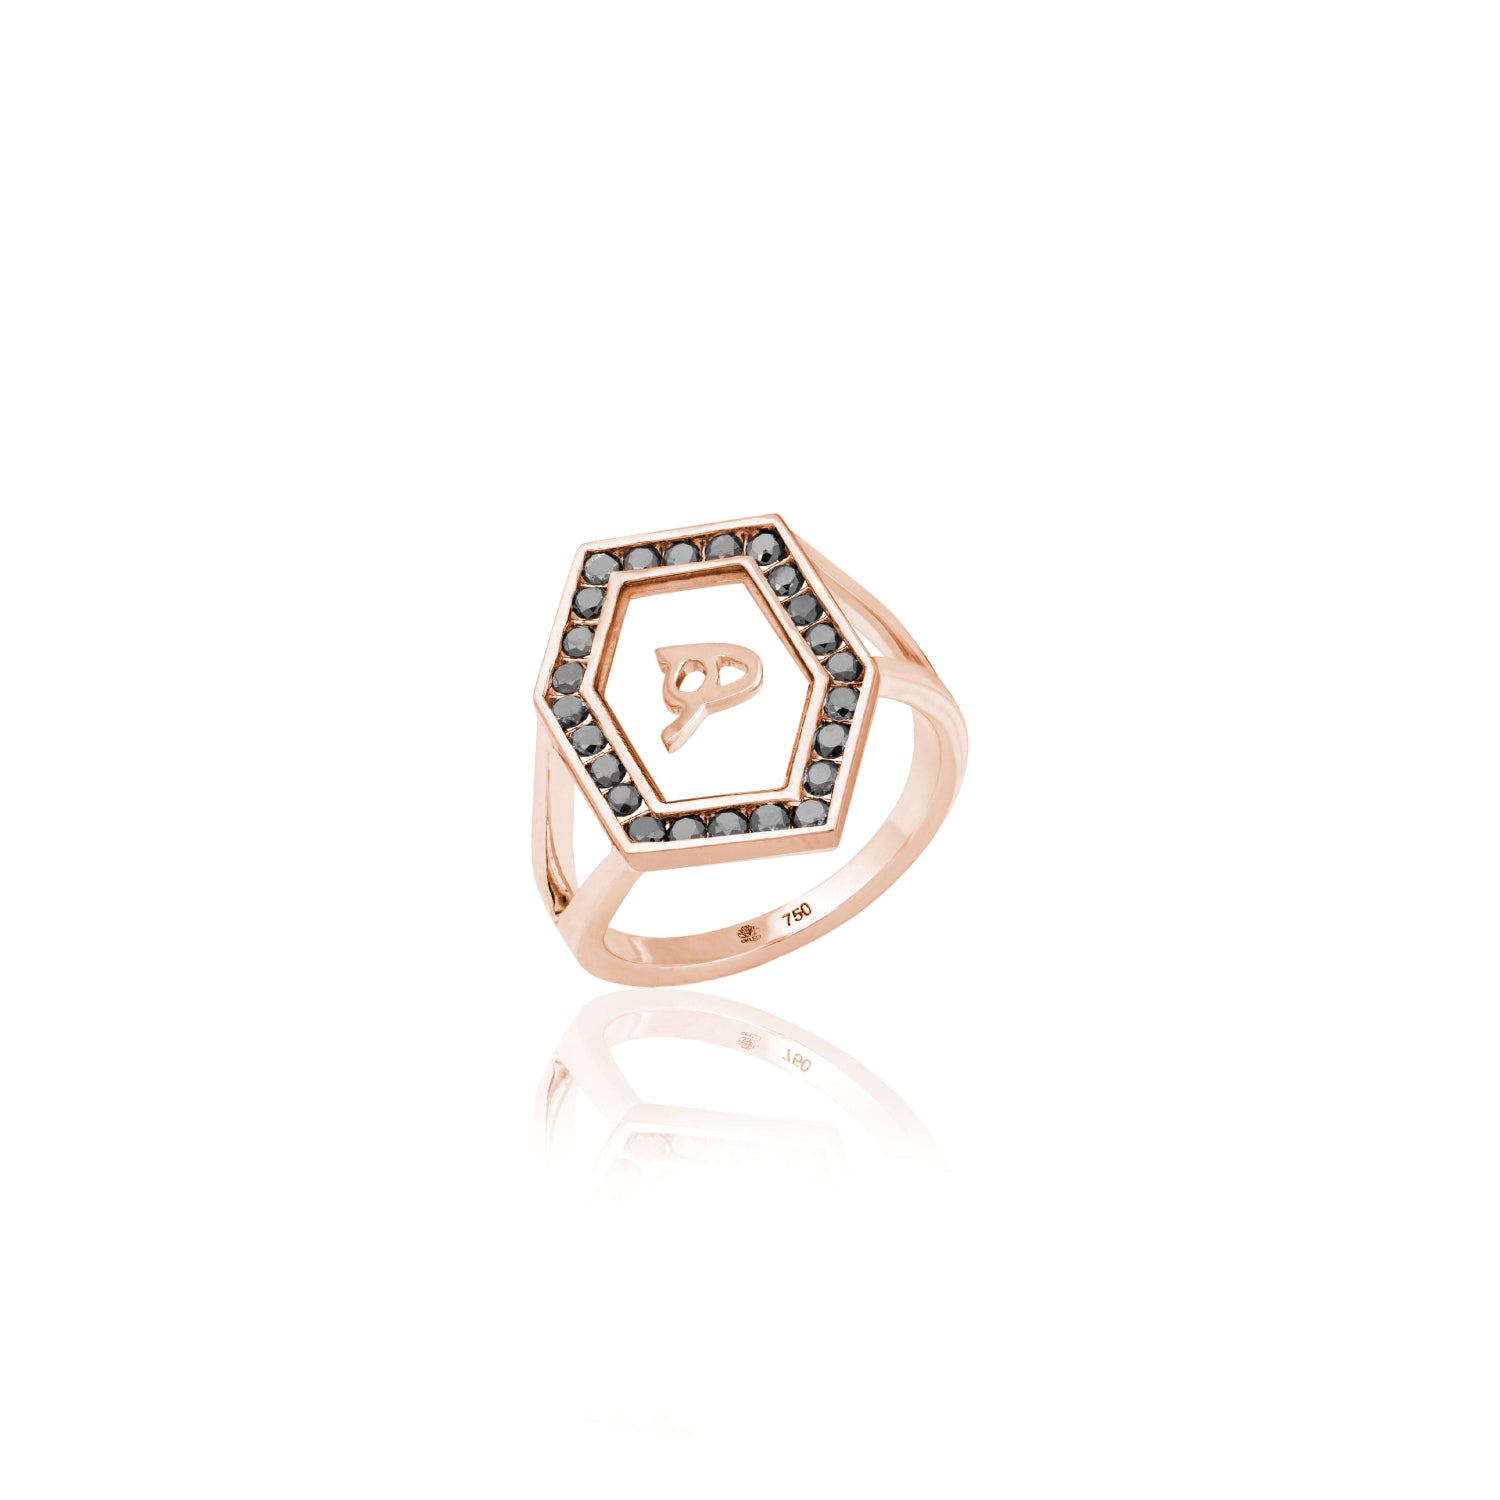 Qamoos 1.0 Letter هـ Black Diamond Ring in Rose Gold